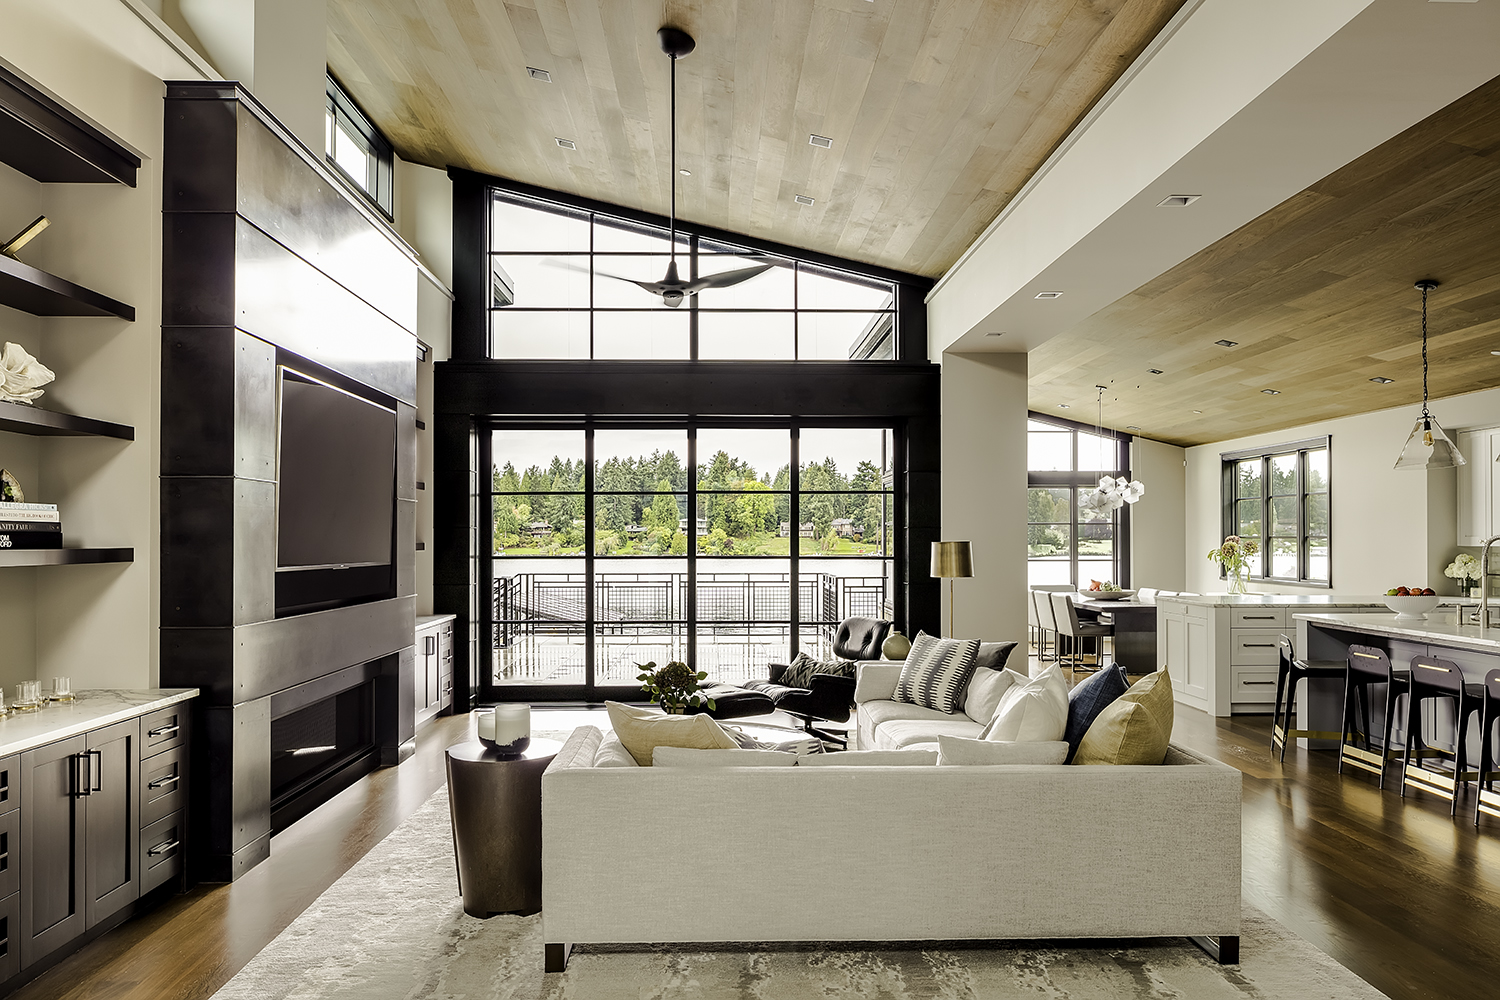 Contemporary, Light-Filled Interior Design